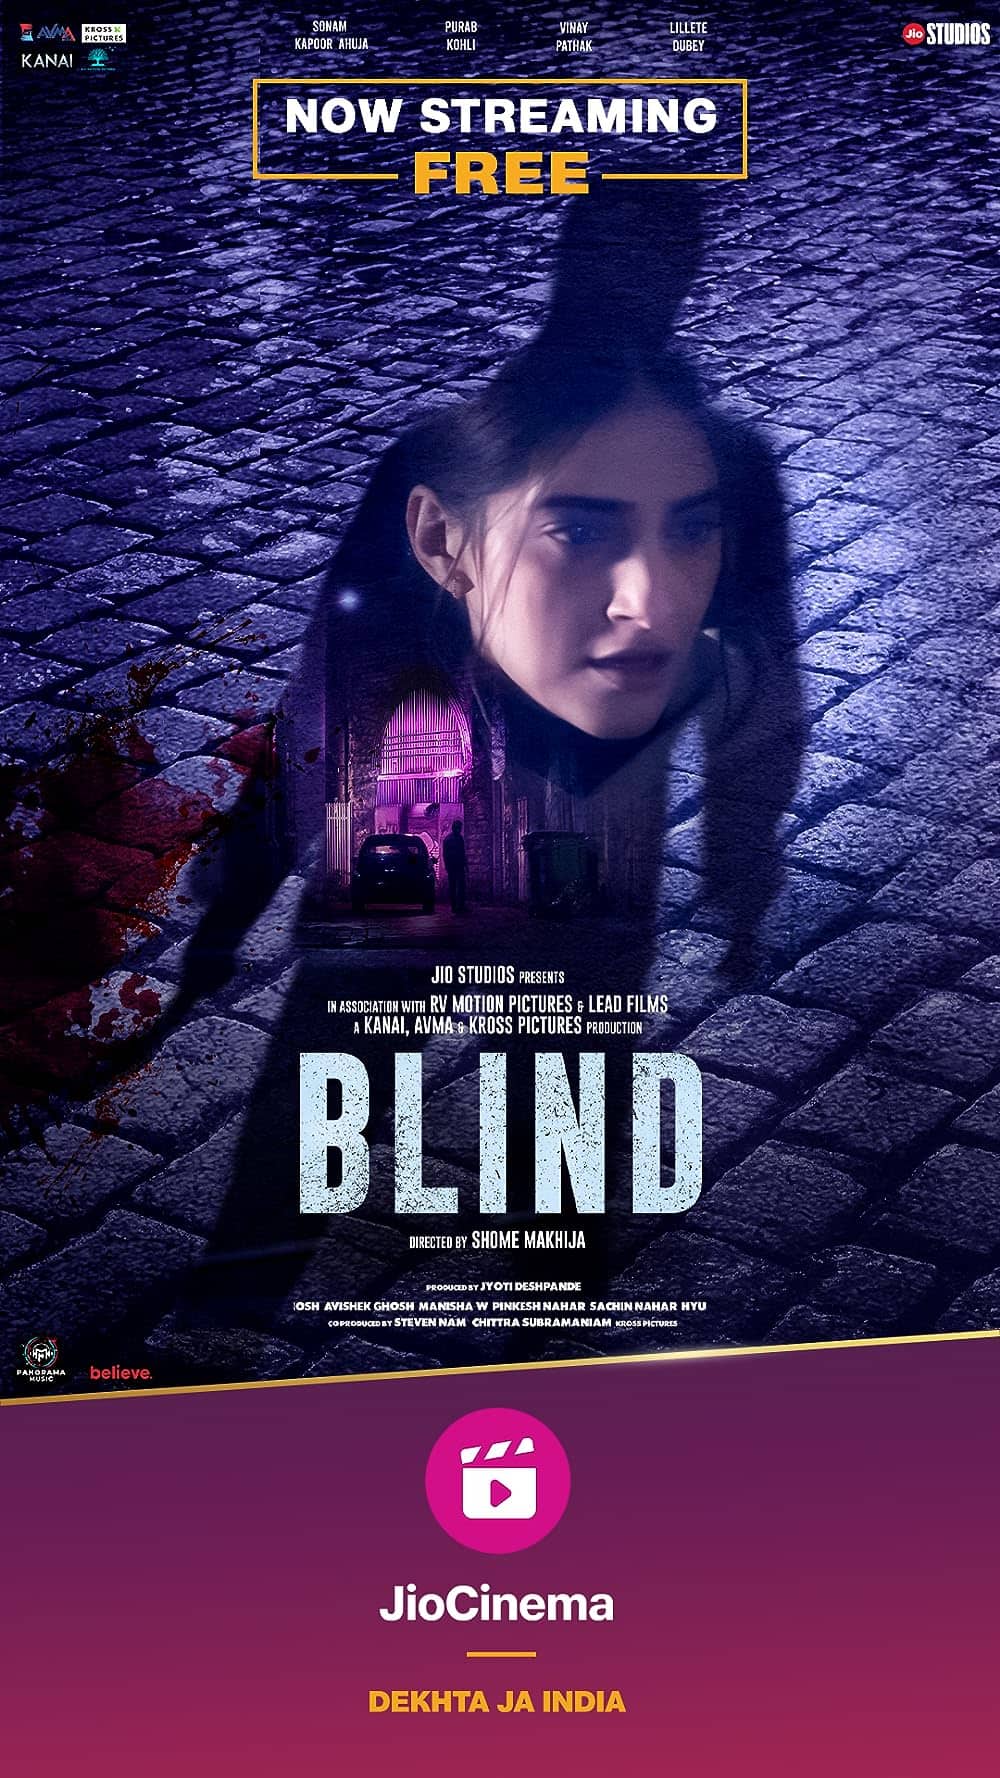 Blind - Film Cast, Release Date, Blind Full Movie Download, Online MP3 ...